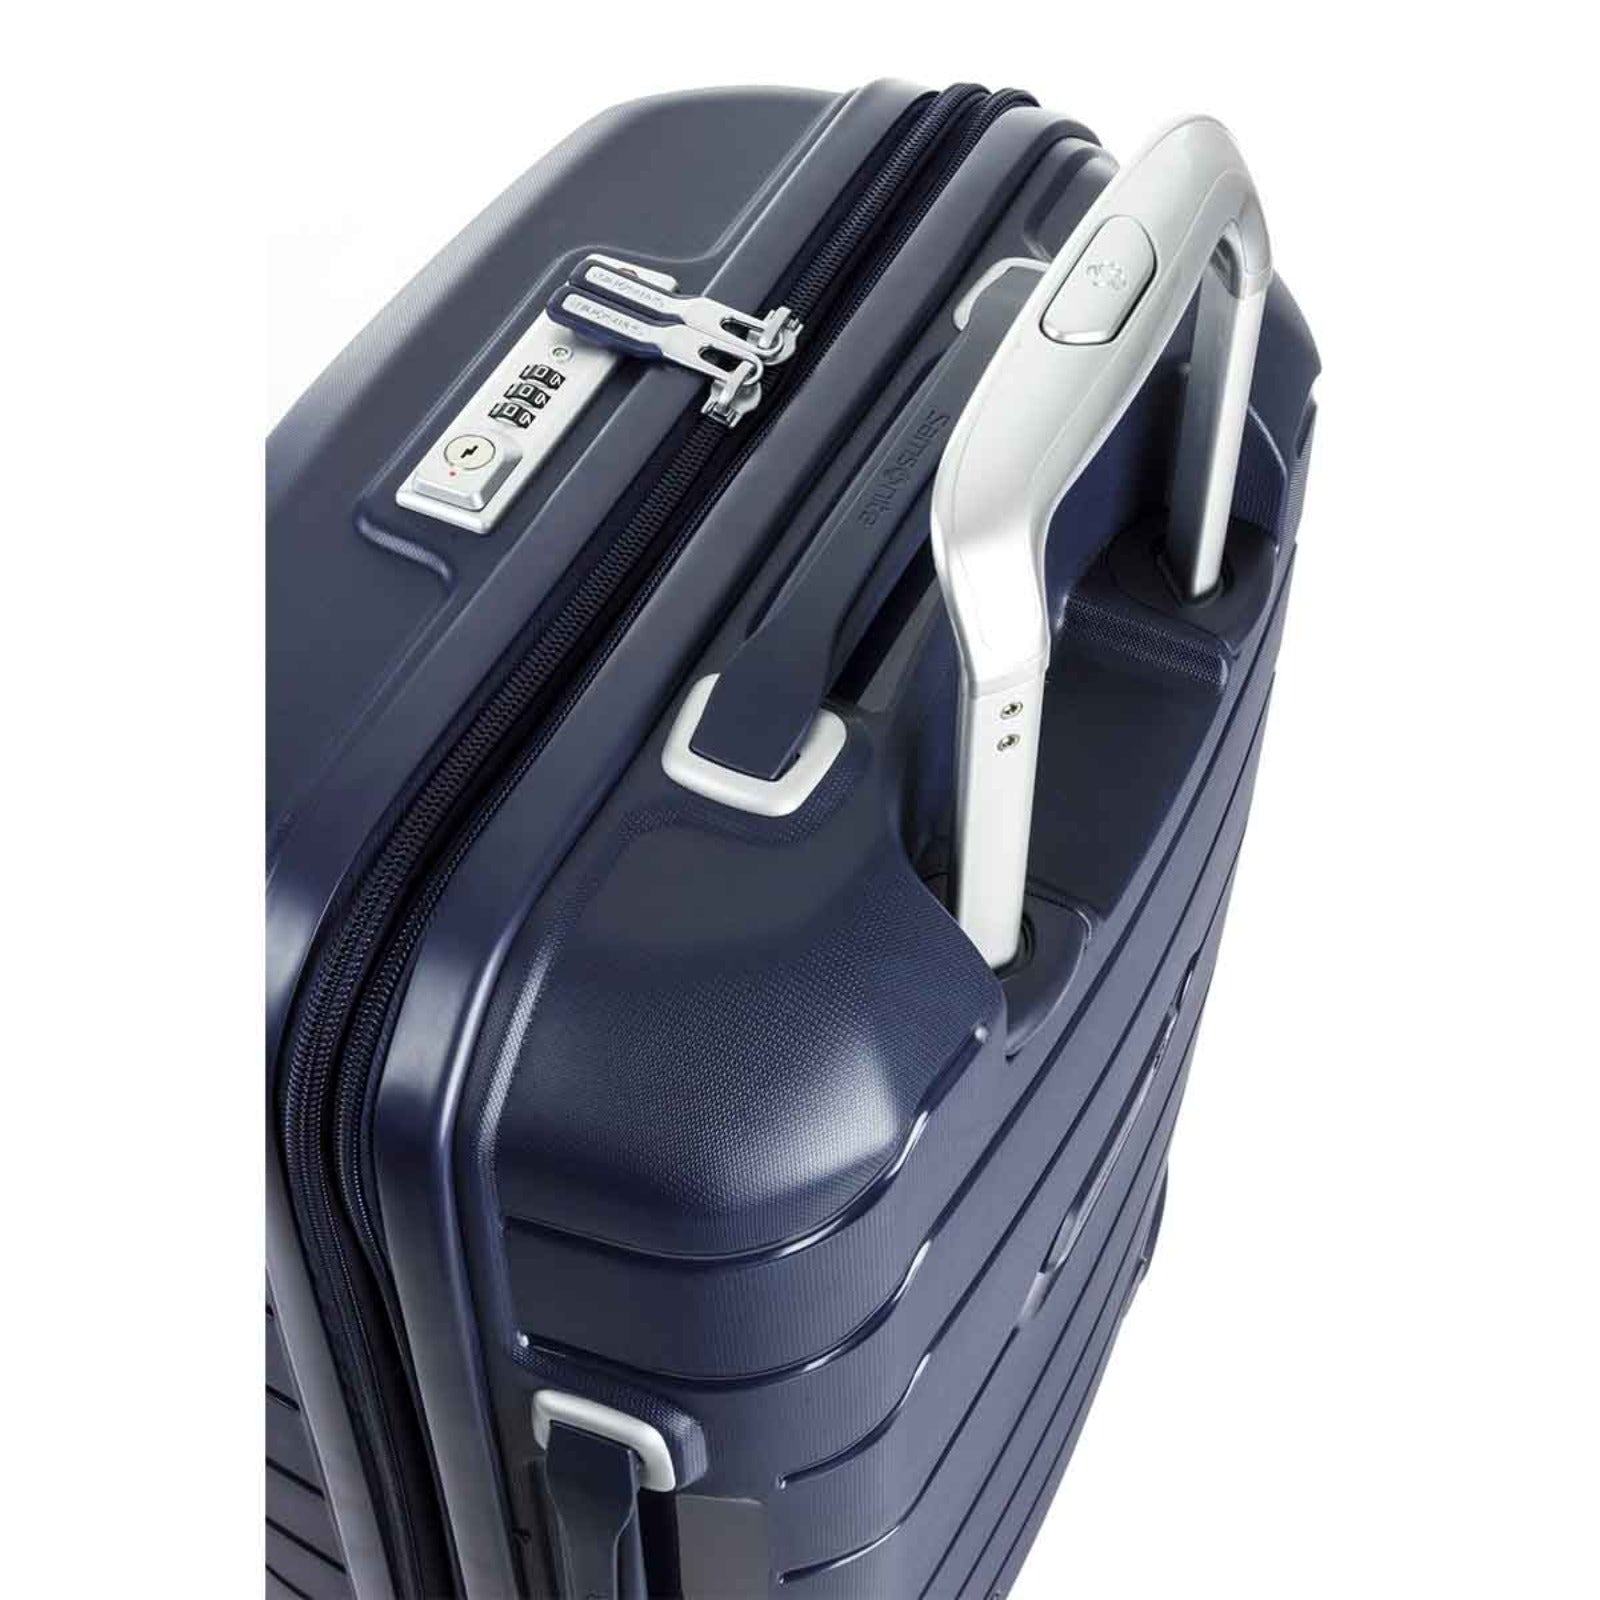 Samsonite_Oc2lite_55cm_Carry-On_Suitcase_Navy_Trolley_Handle_Lock